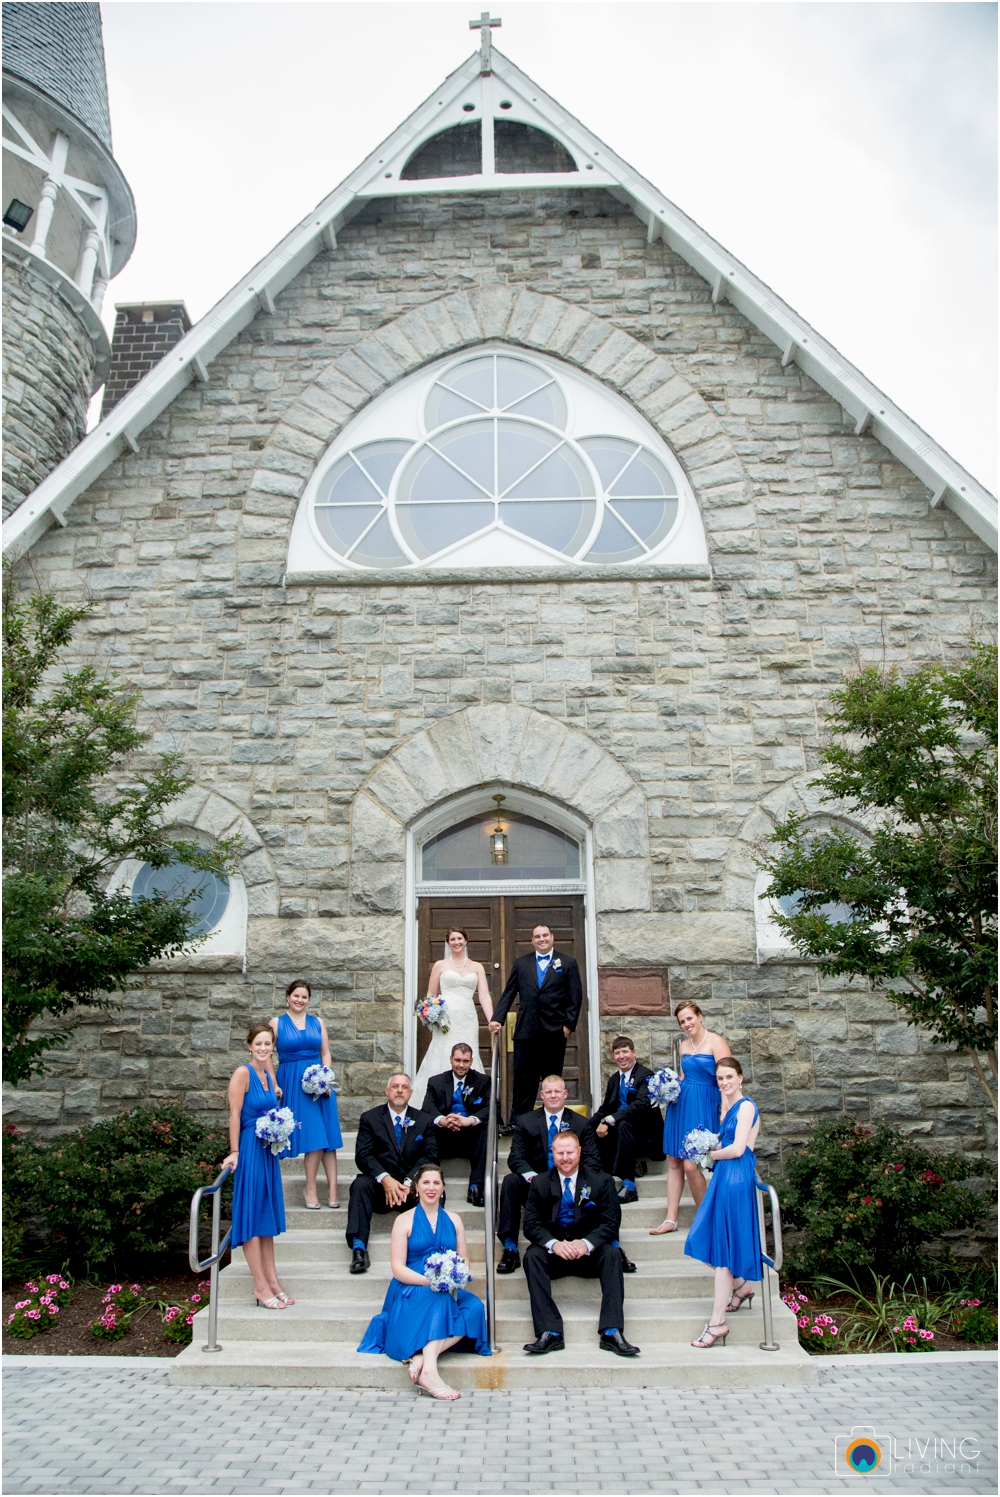 Jarrettsville-Gardens-Pennsylvania-Weddings-Living-Radiant-Photography-outdoor-church-wedding-photos_0048.jpg